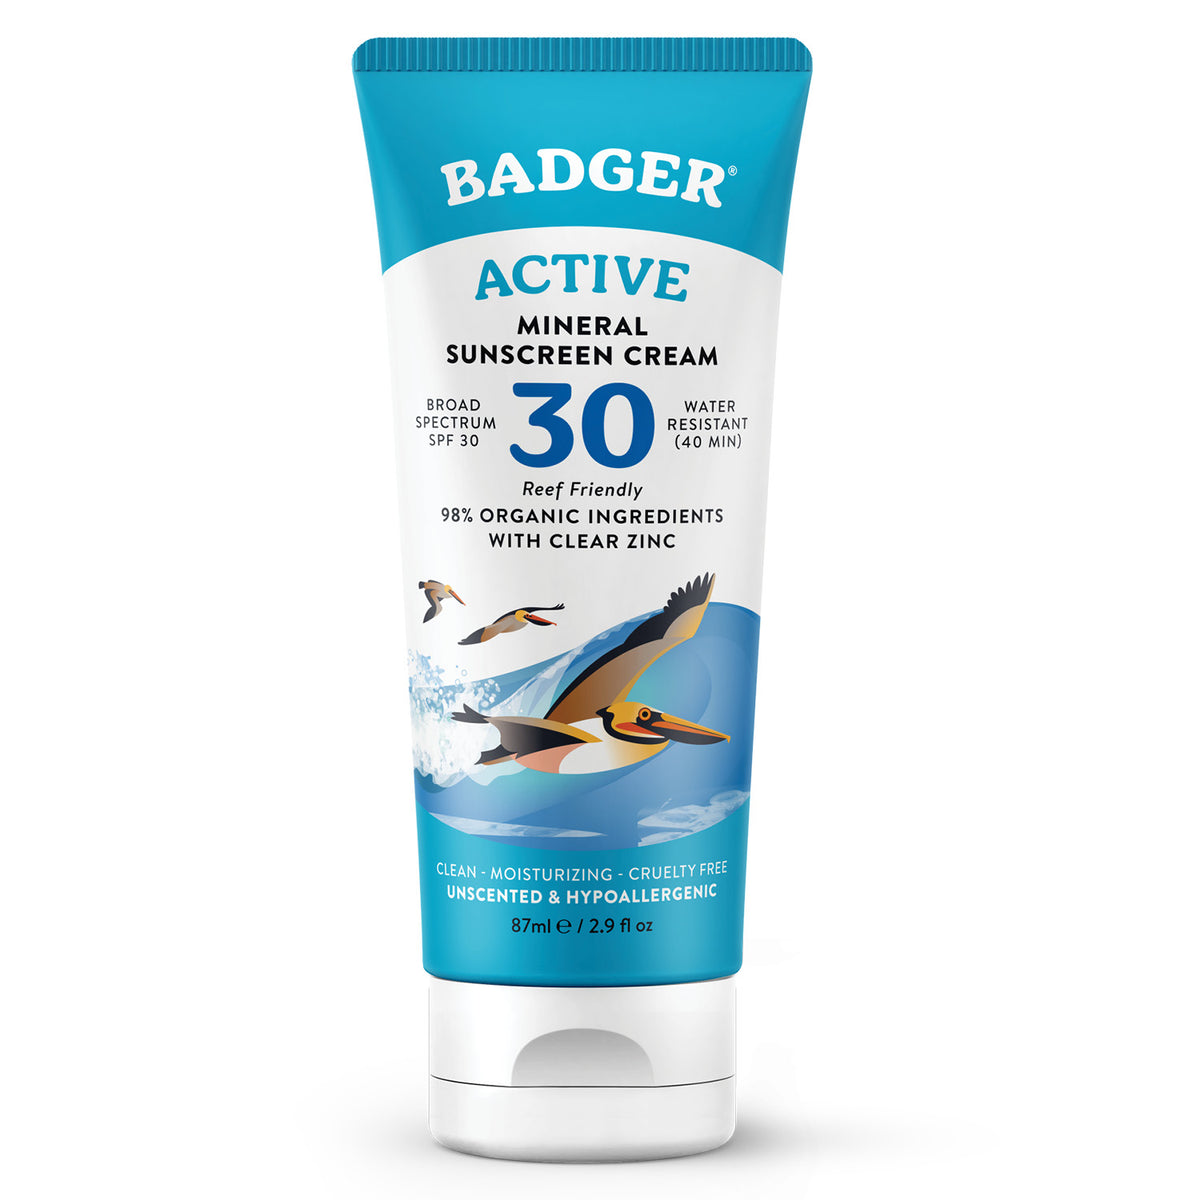 Badger sunscreen amazon